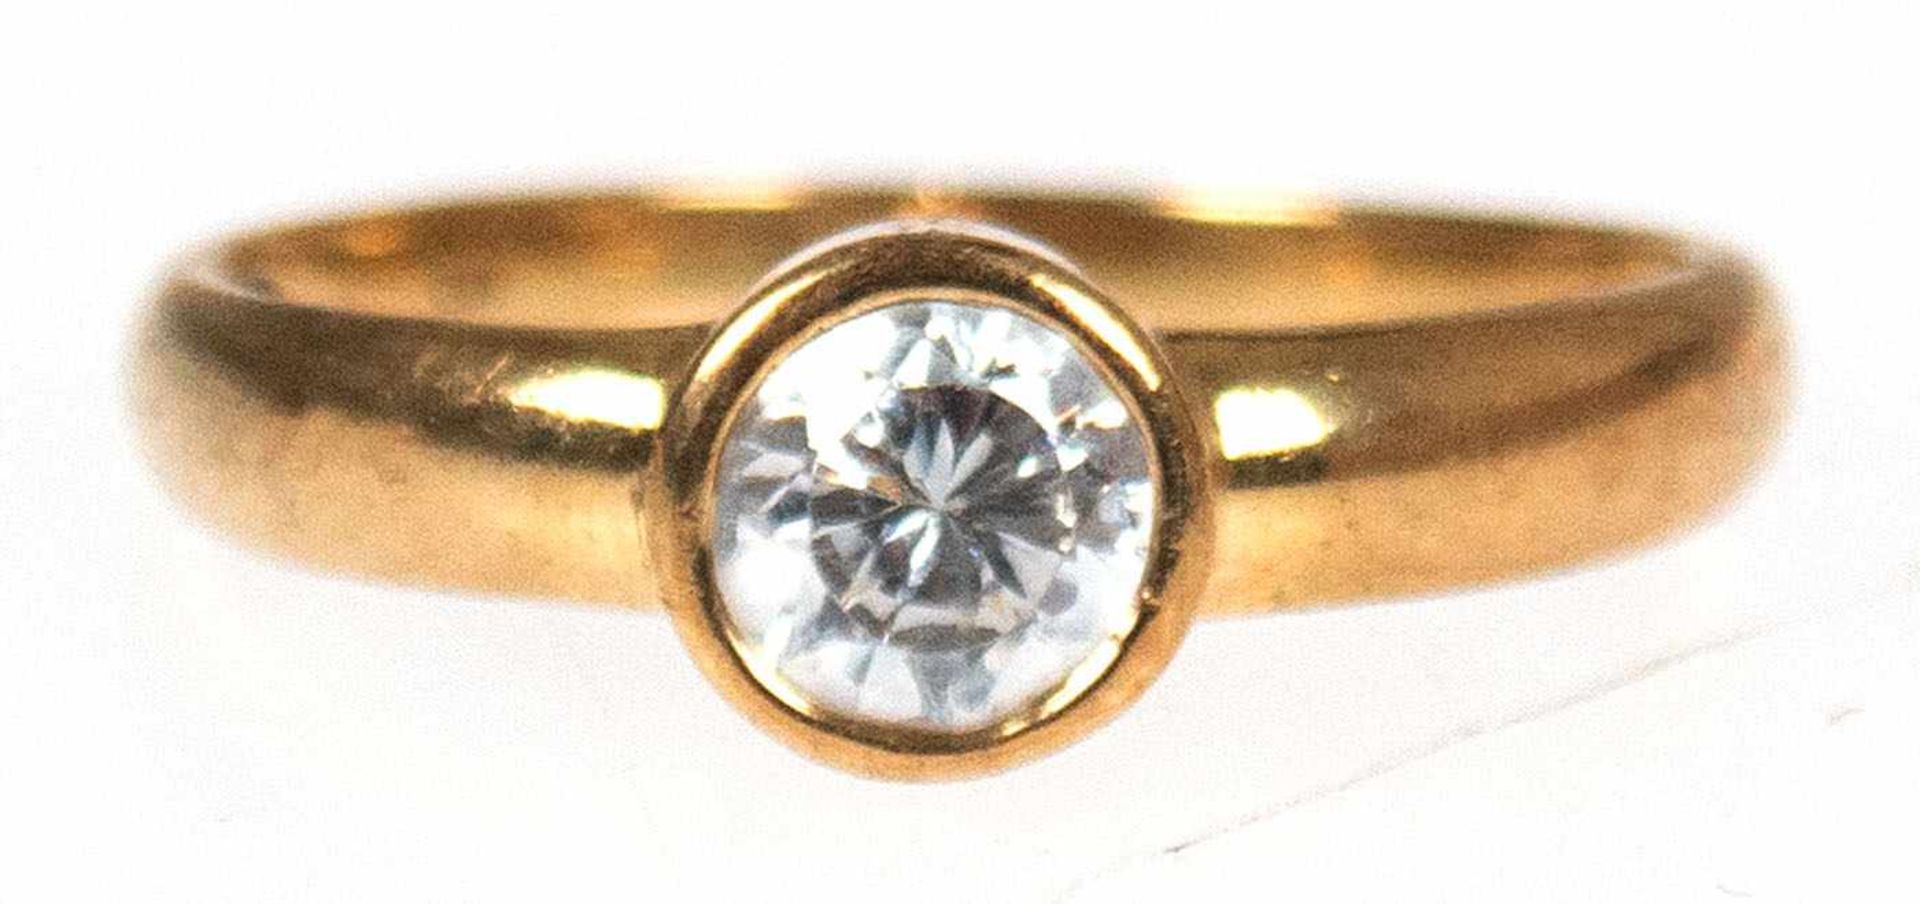 Ring, 333er GG, 1 Zirkonia ca. 0,5 ct., Gew. 1,7 g, RG 54, Innendurchmesser 19,7 mm,